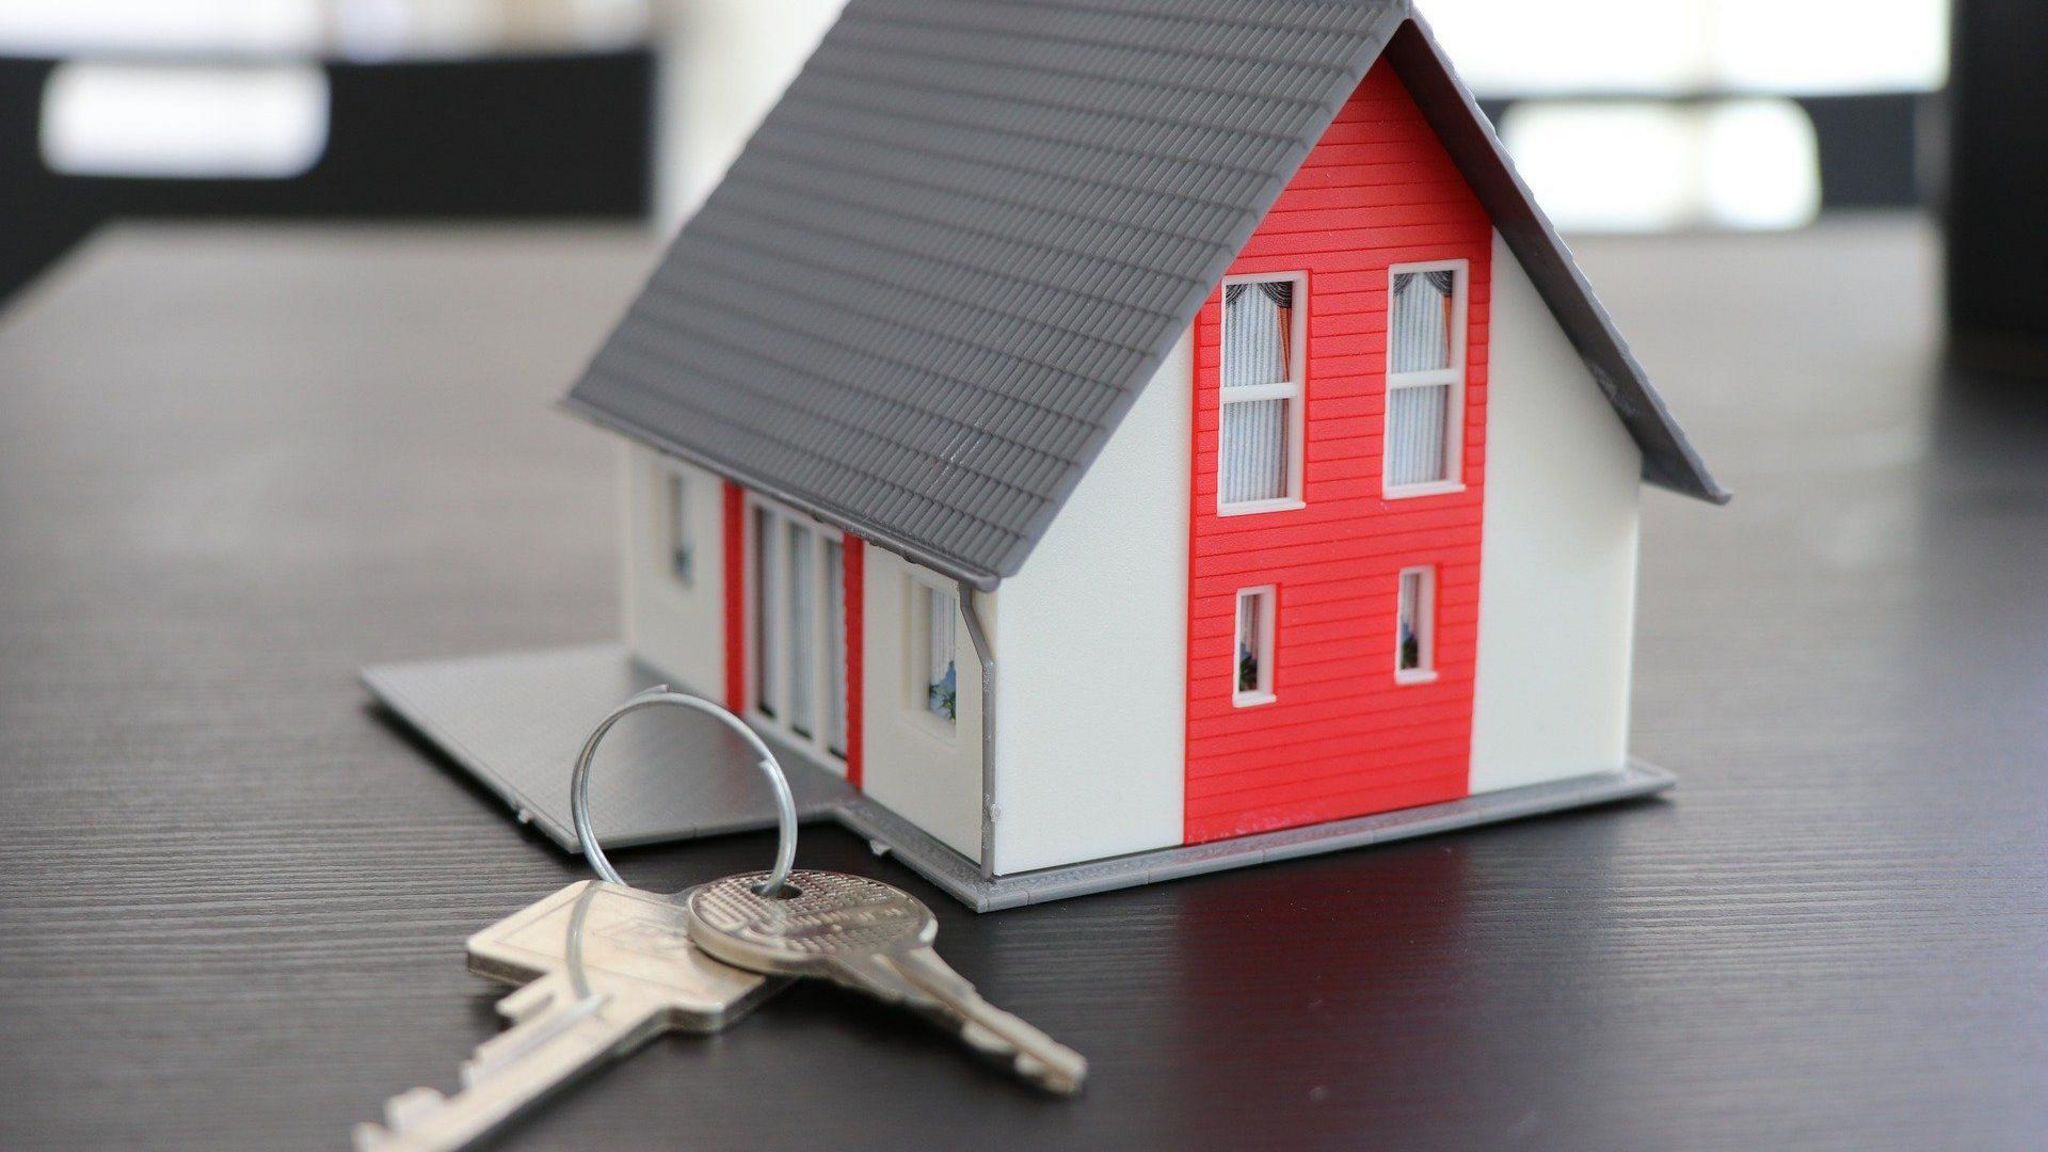 Model house and keys (stock image)